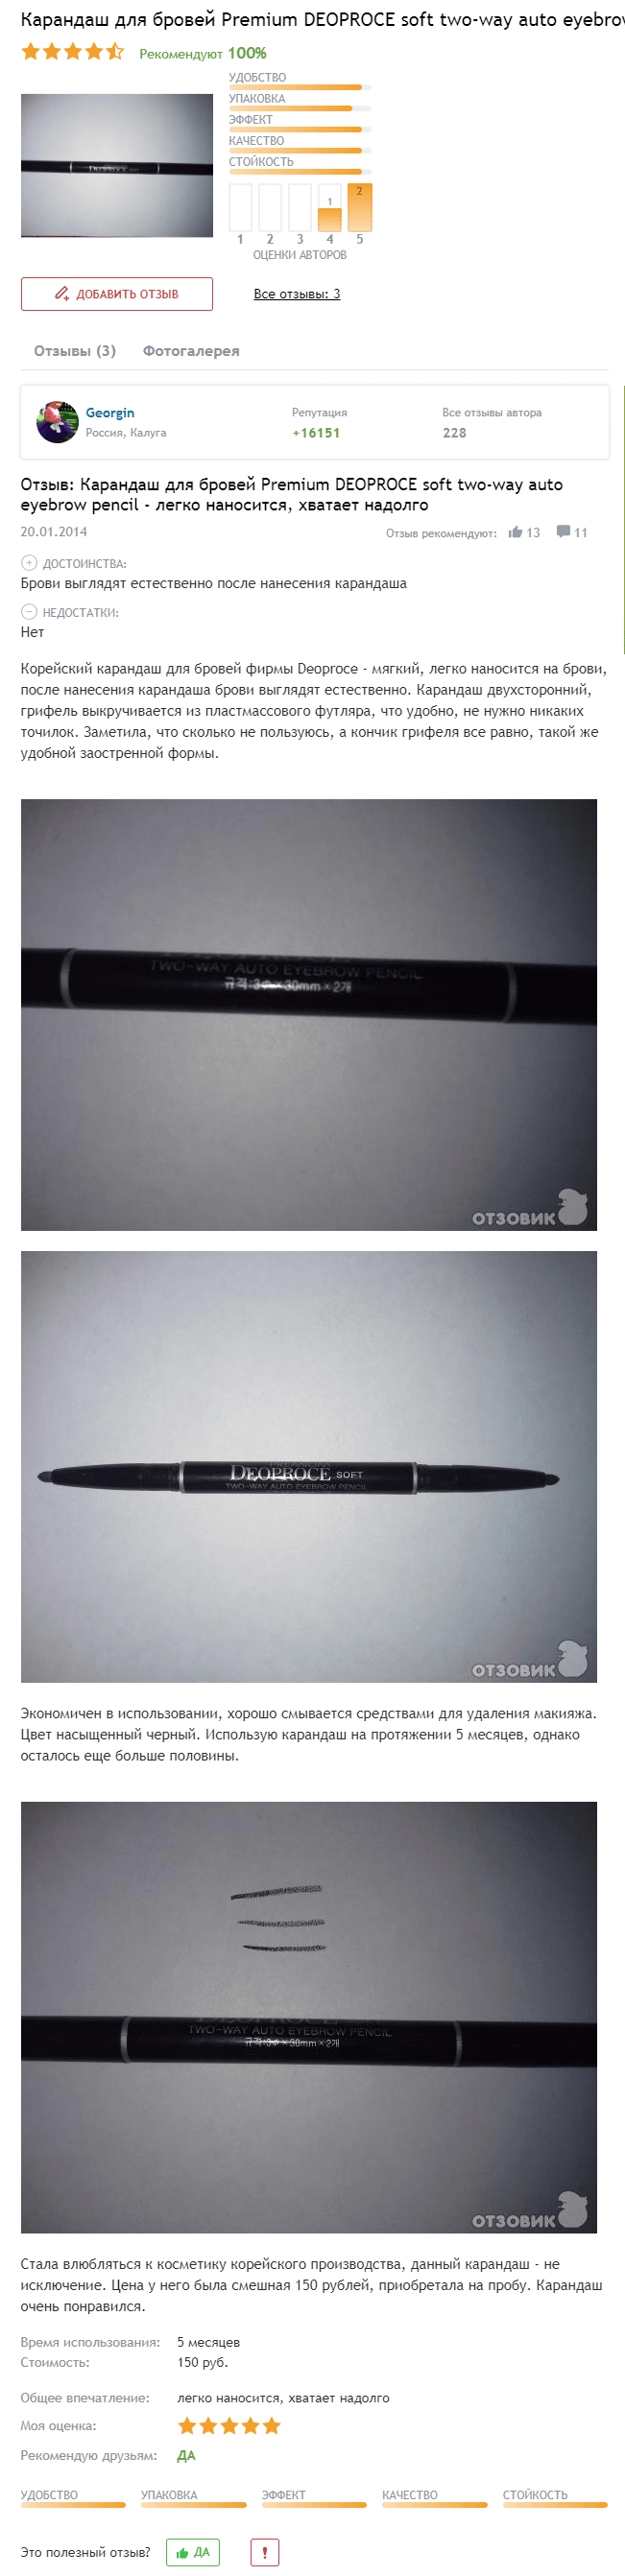 Soft Two-Way Auto Eyebrow Pencil [Deoproce] отзыв 1-min